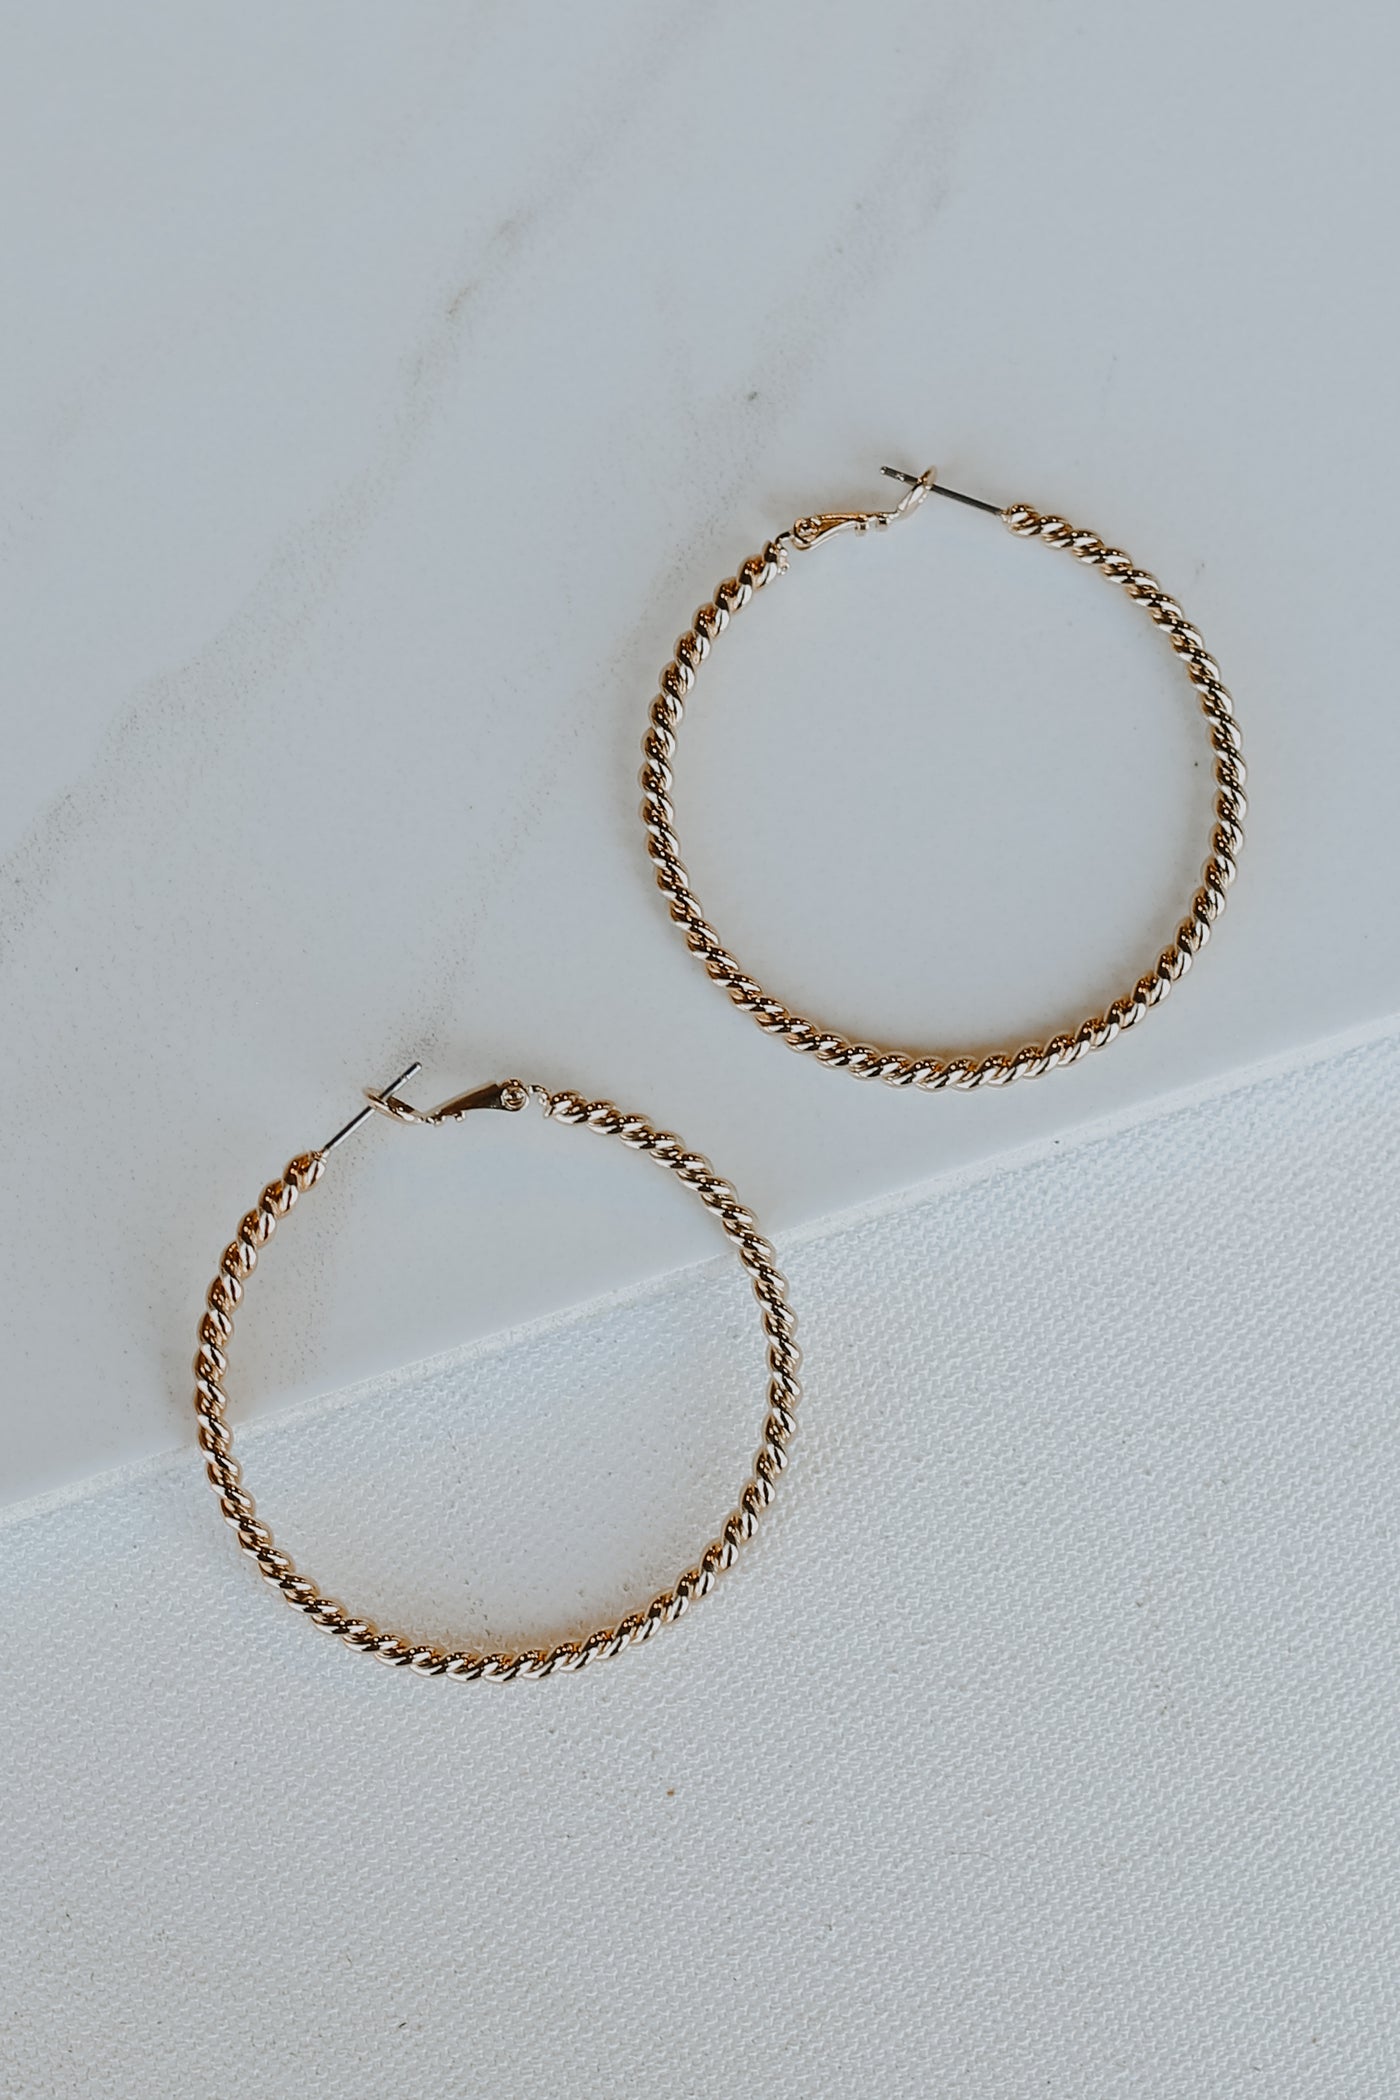 Gold Twisted Hoop Earrings flat lay